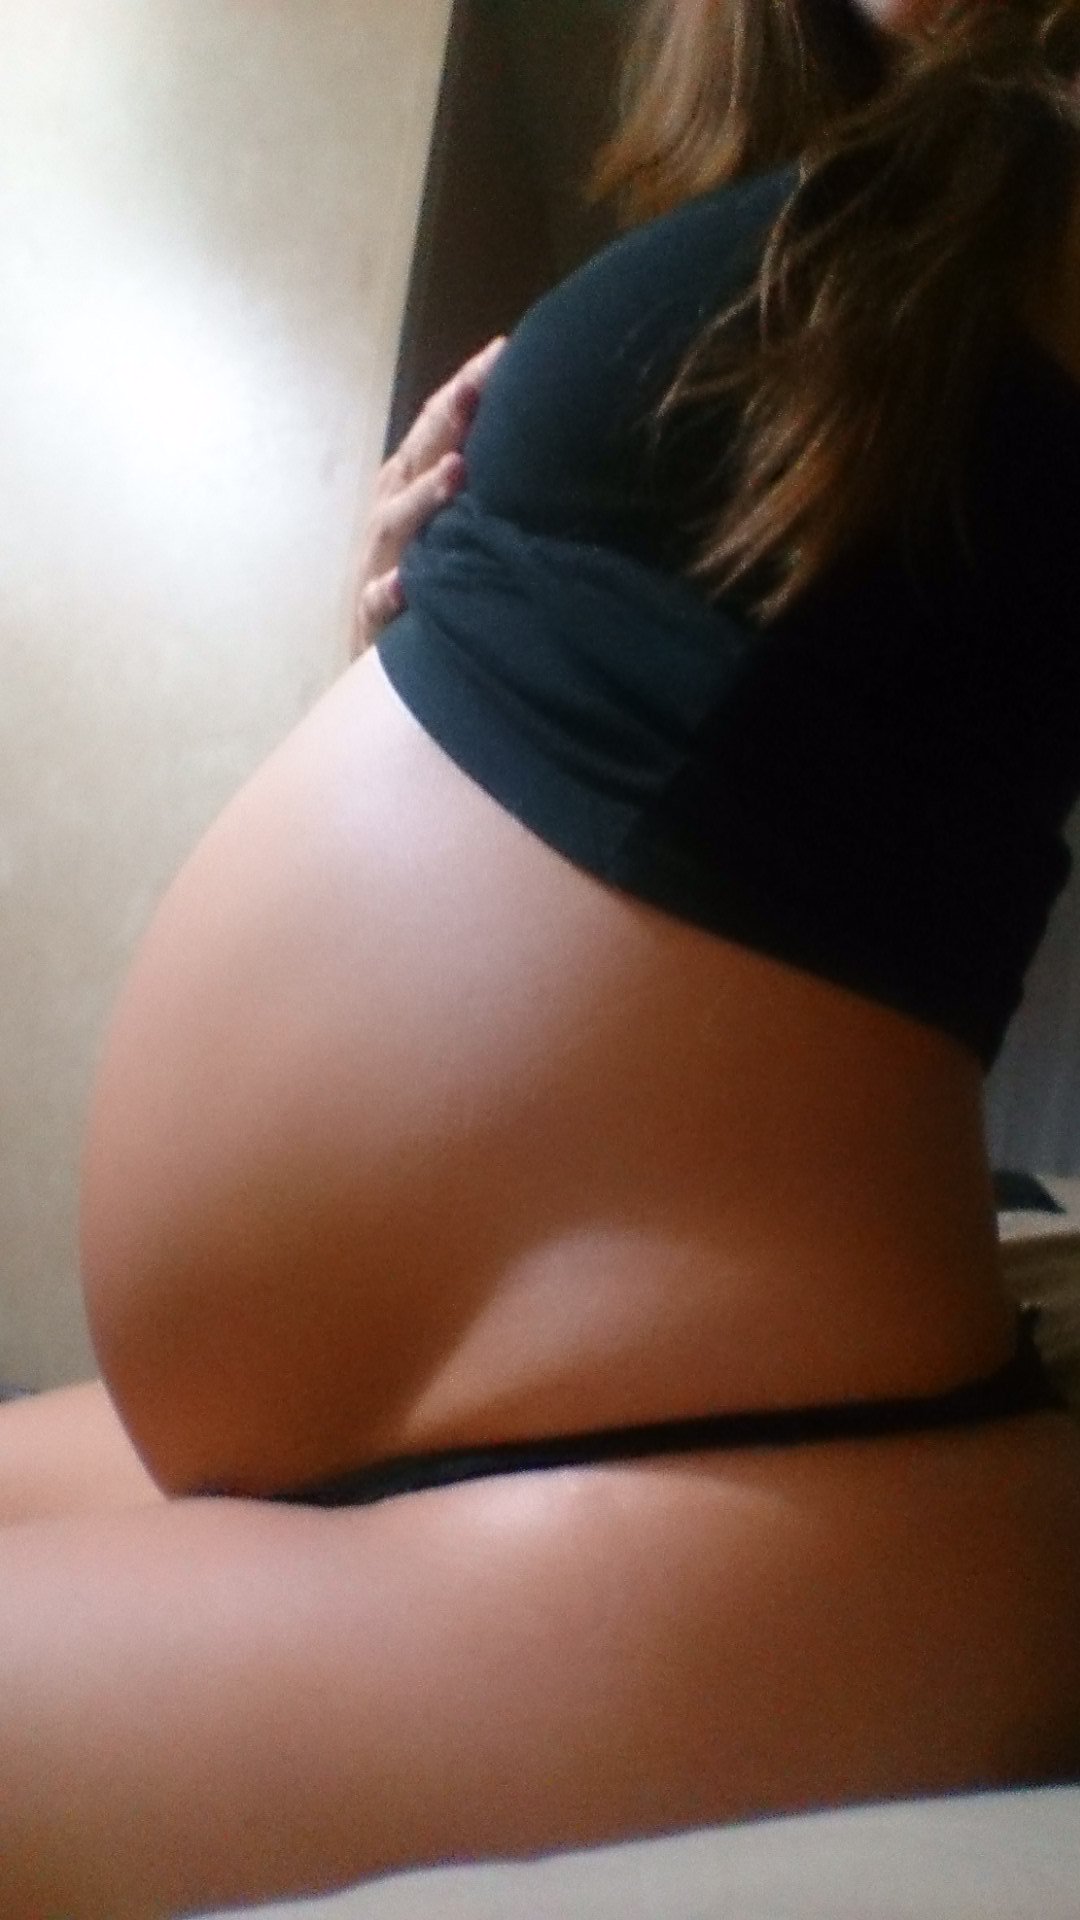 33 weeks #pregnant #livecam now https://t.co/BandRRHmdj https://t.co/uMeVJfcx5t